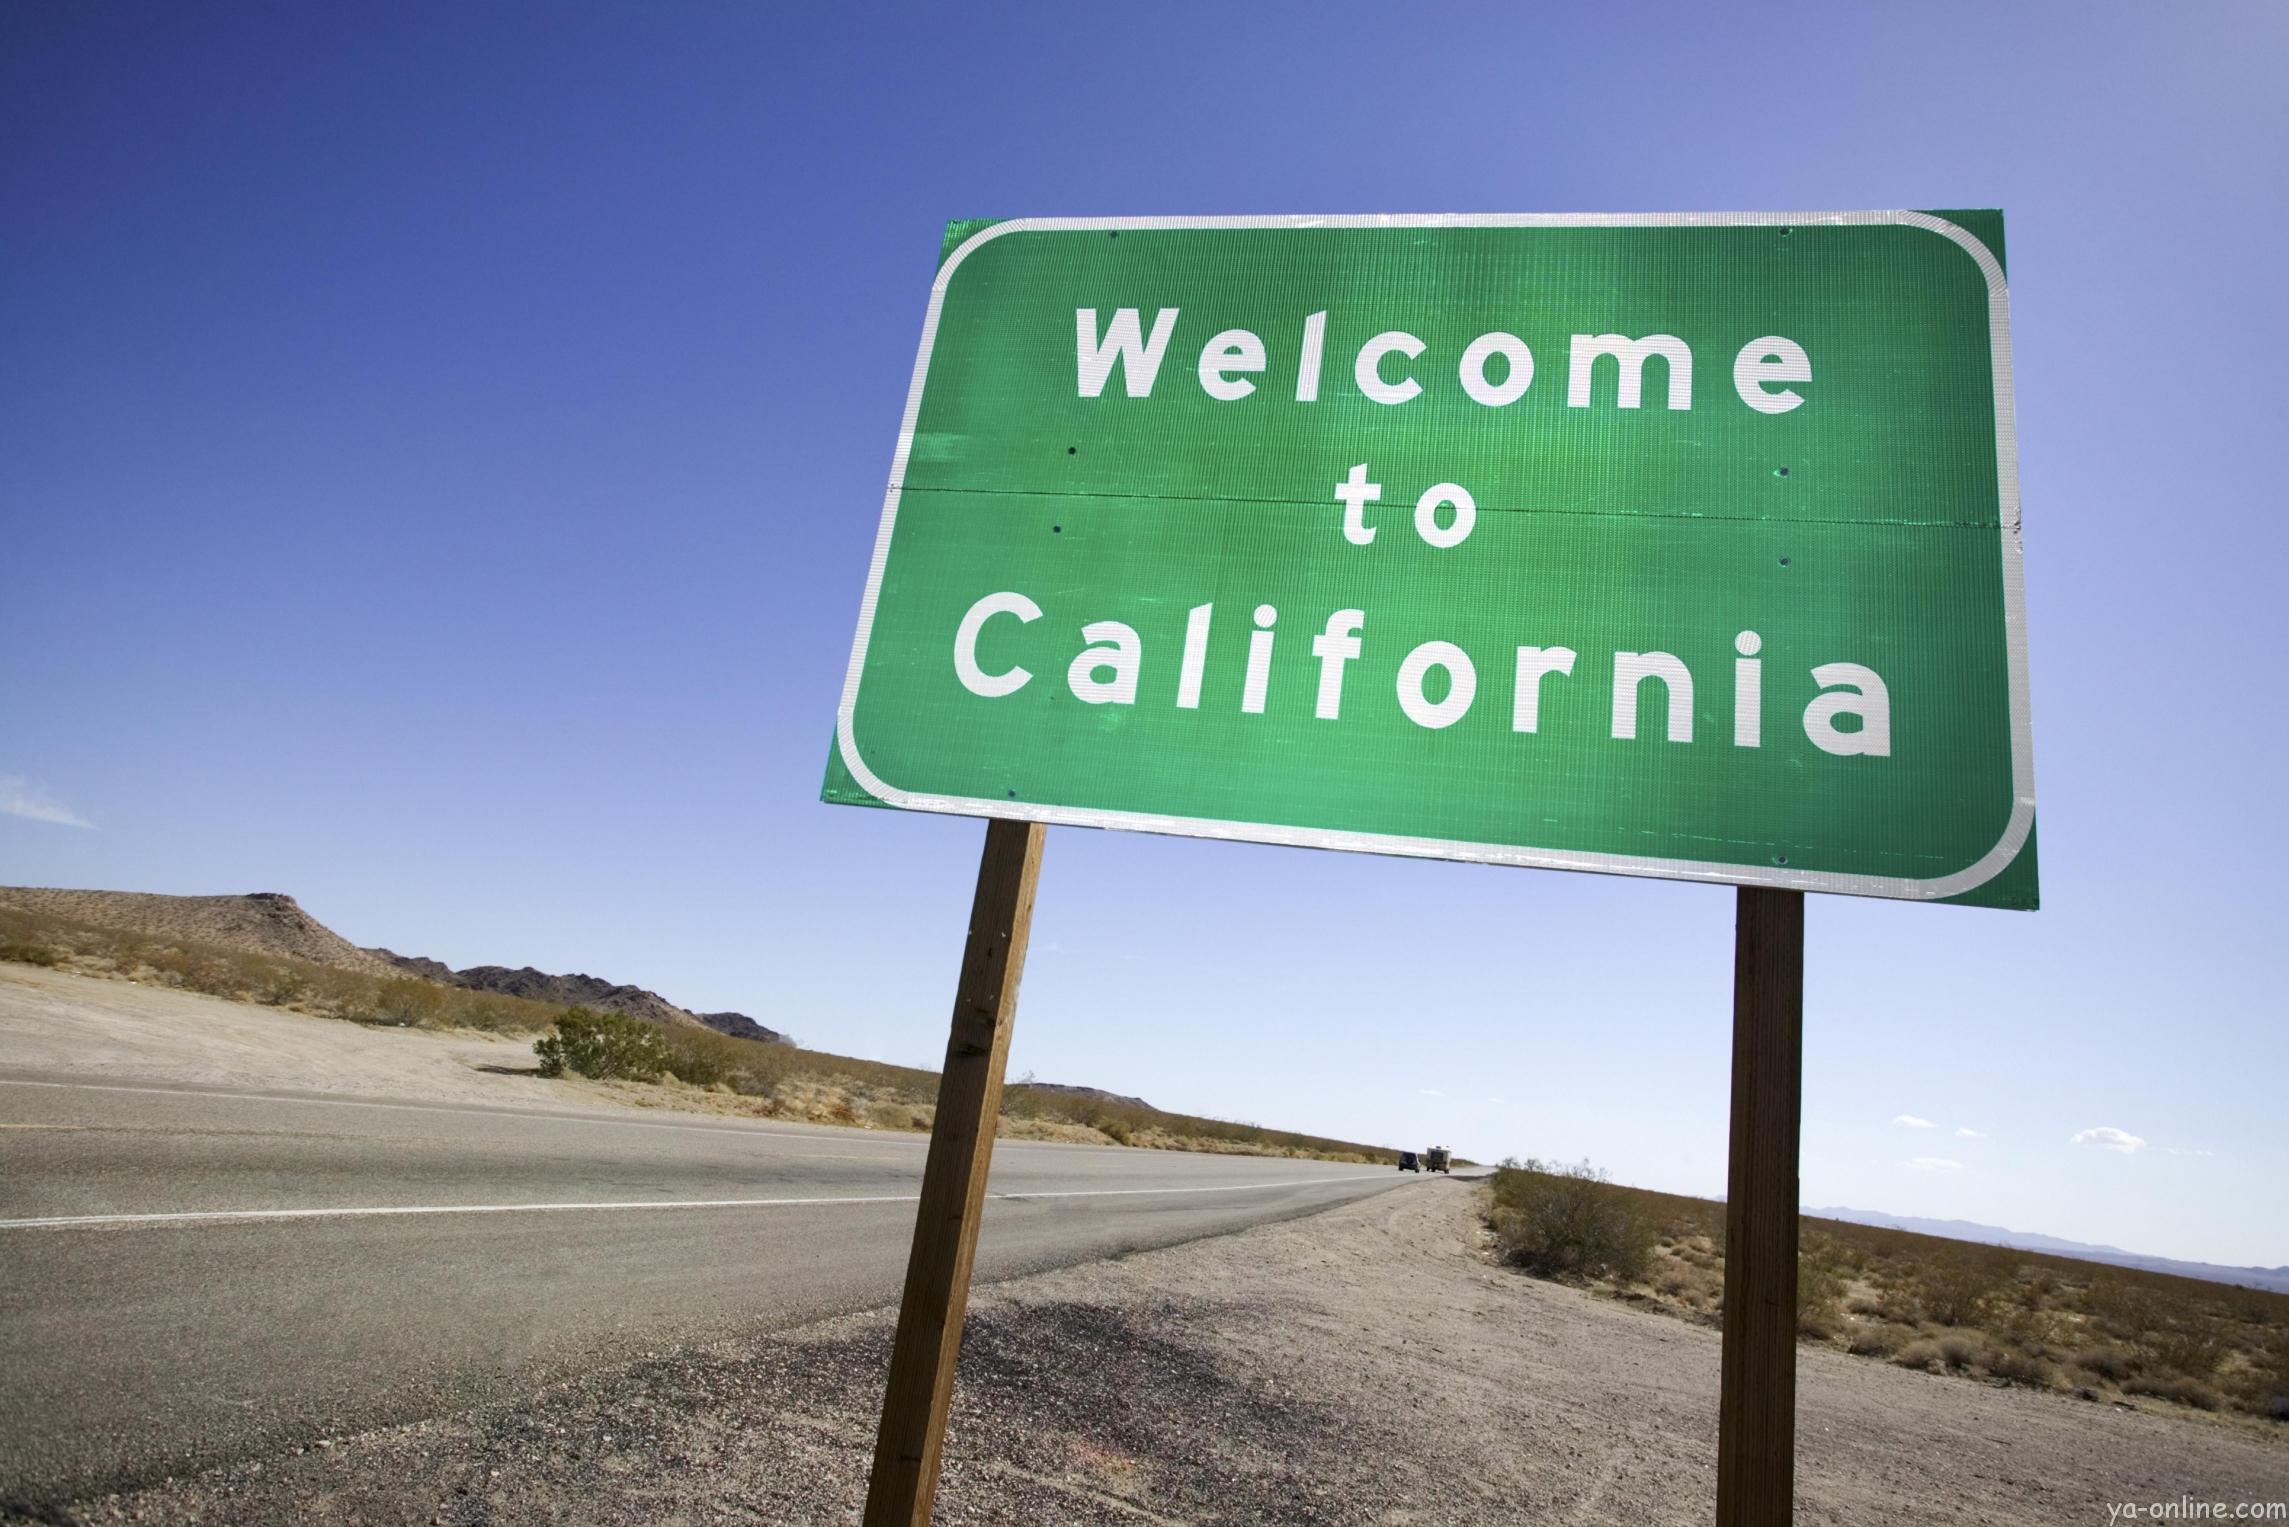 The Legislative Body Of California Has Adopted A Law Regarding Blockchain